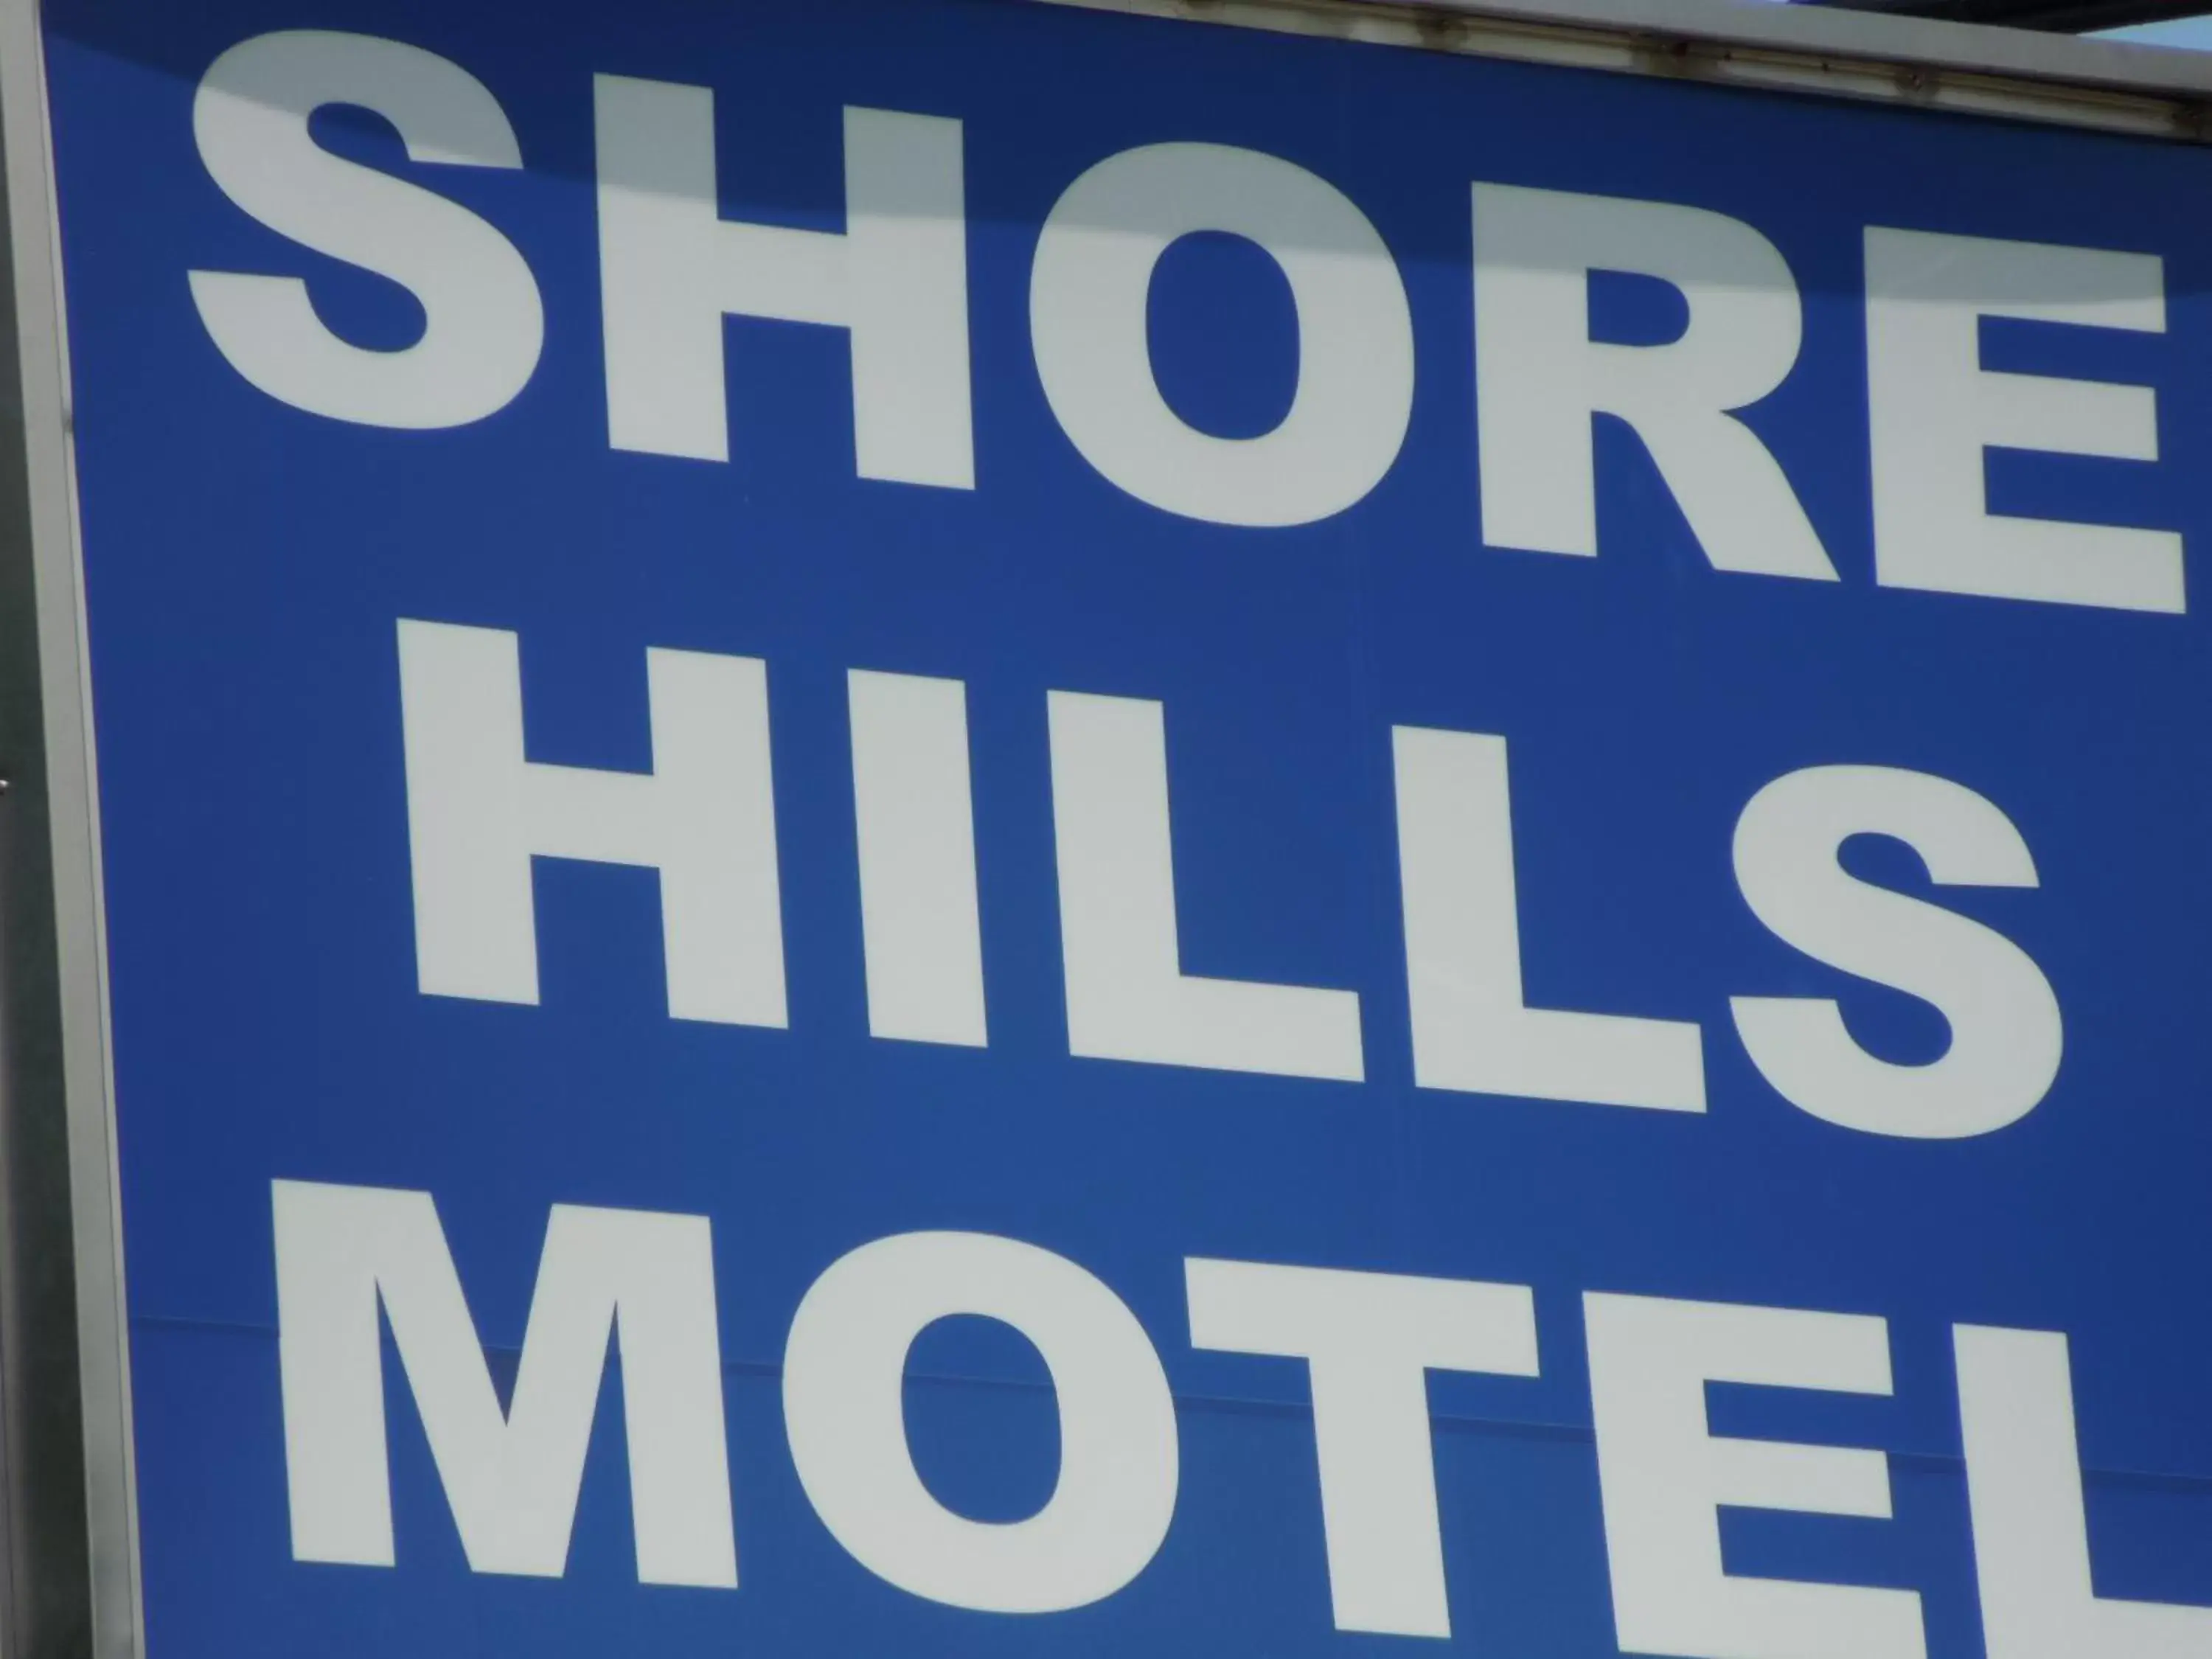 Property logo or sign in Shore Hills Motel